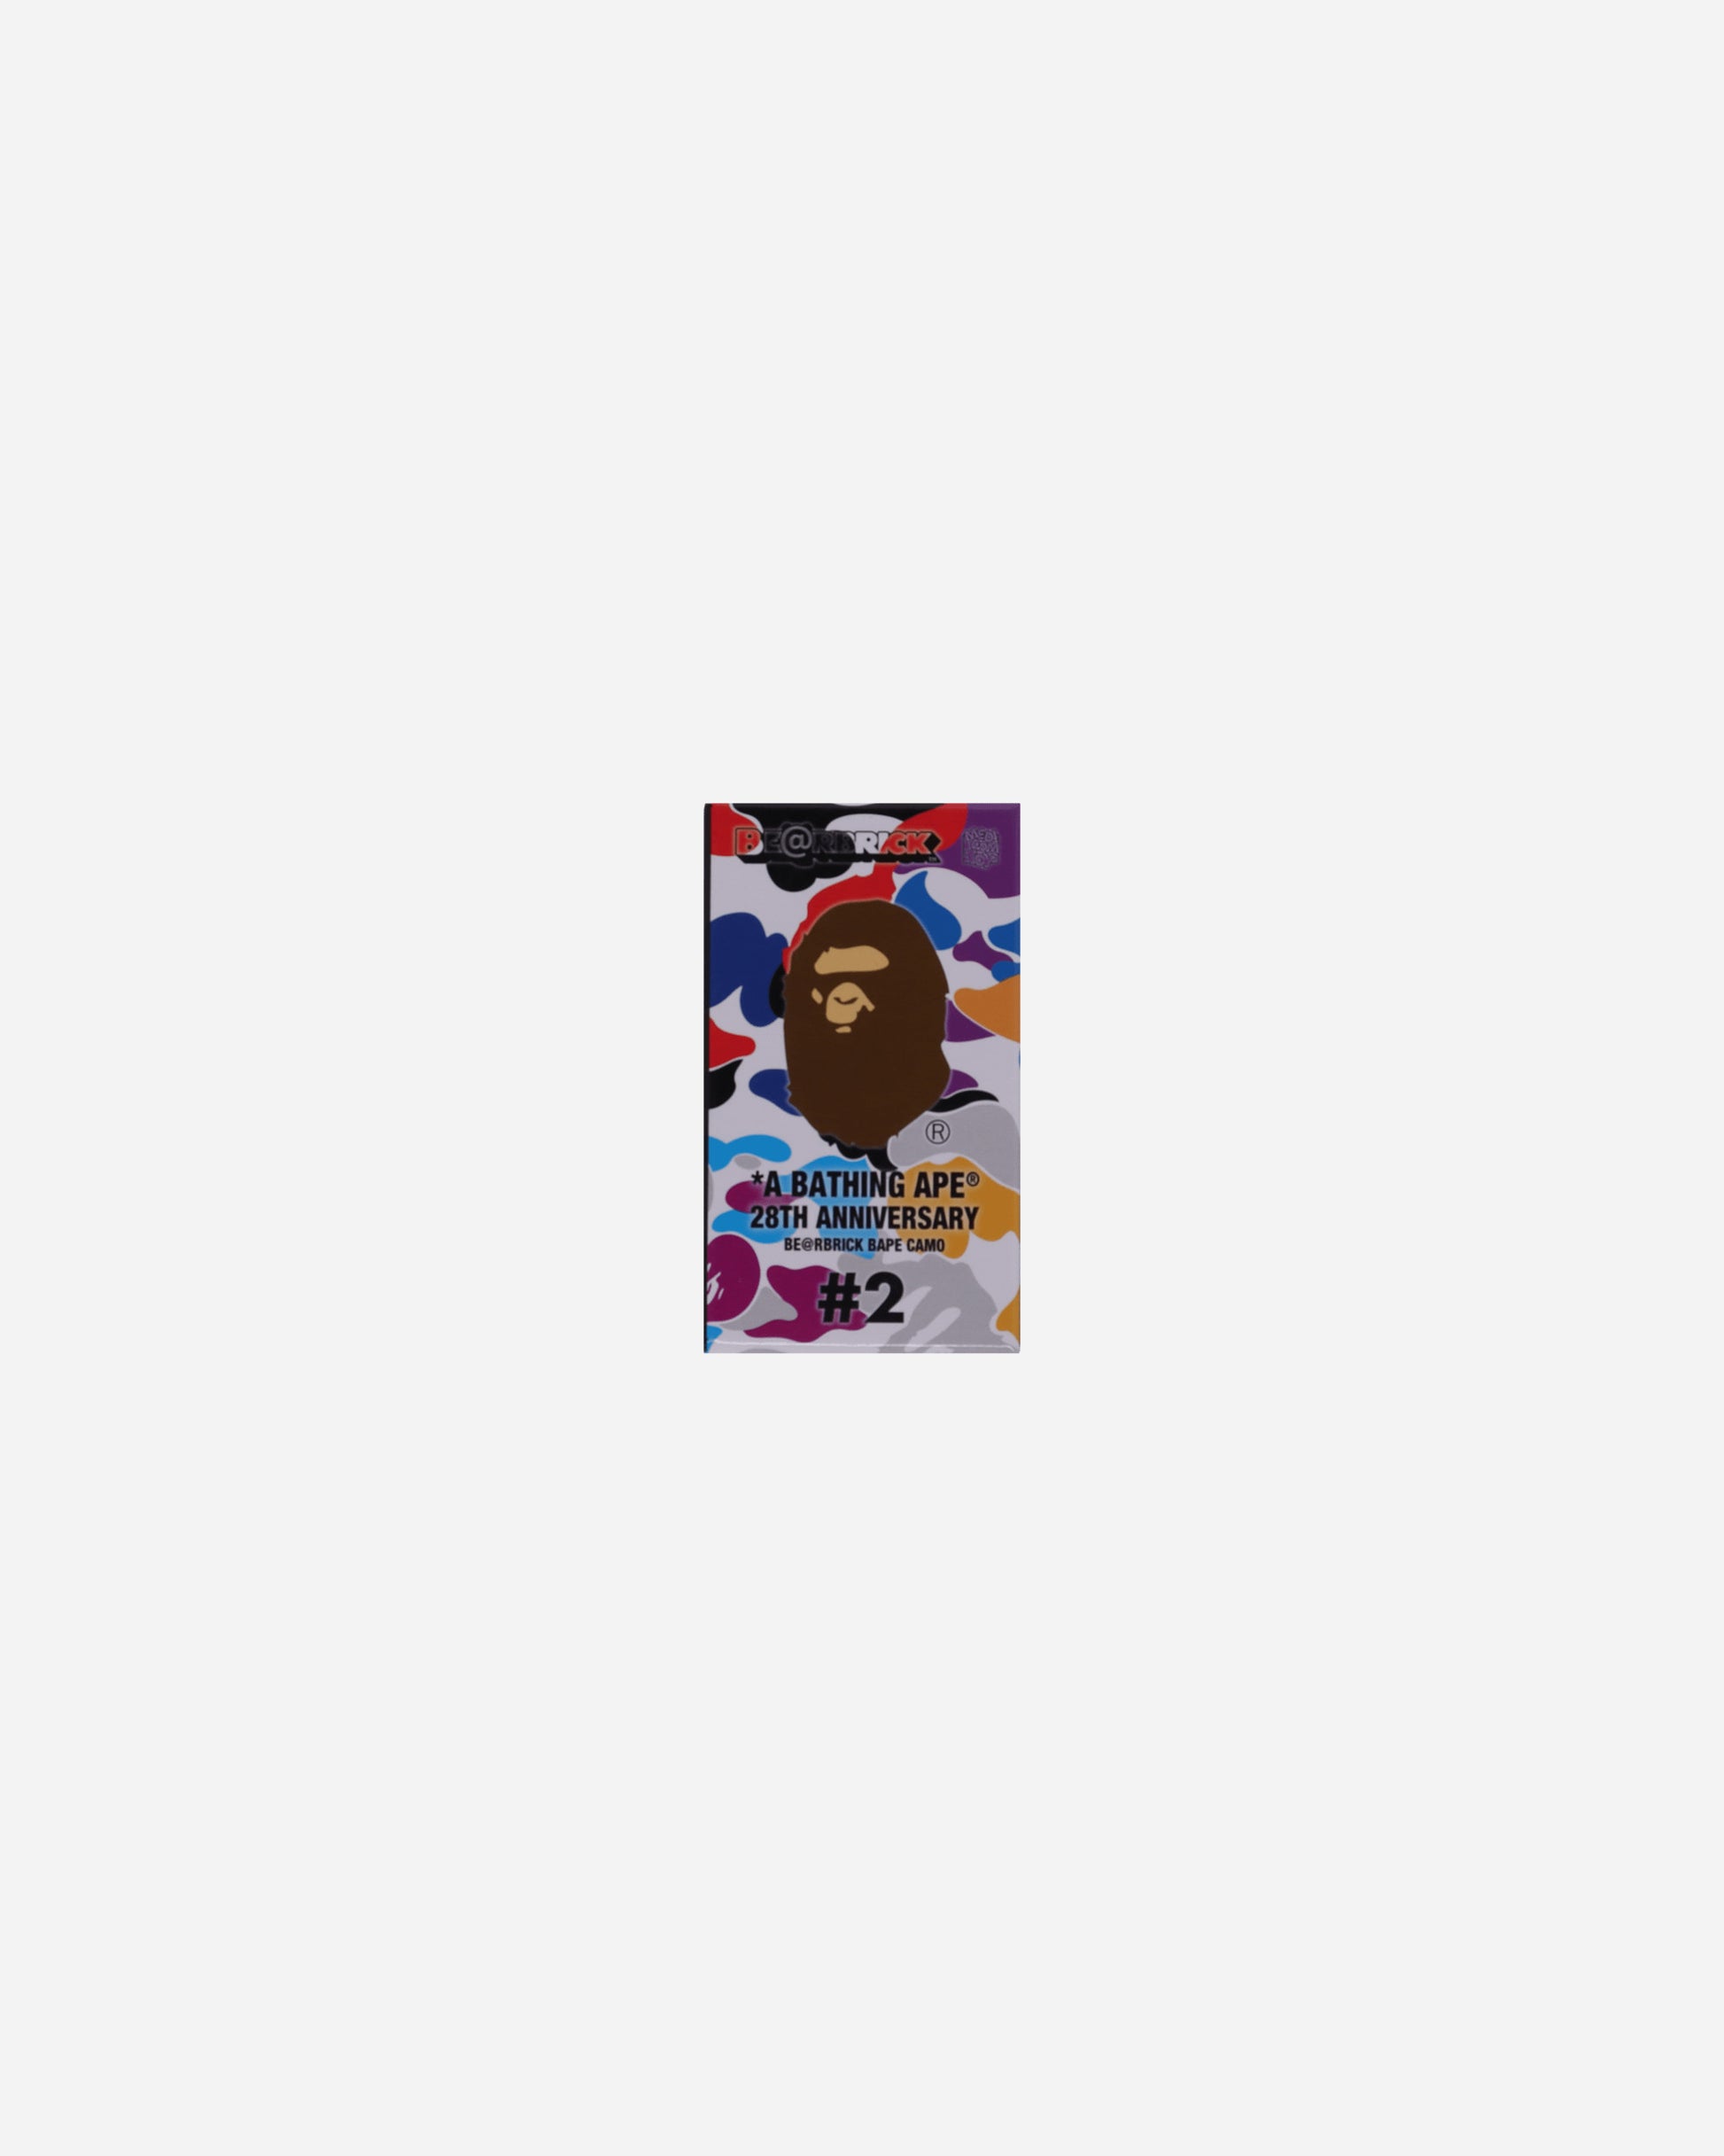 A Bathing Ape 28Th Anniversary Bearbrick Bape Camo 100% #2 Multicolor Homeware Toys 1H23182932 E